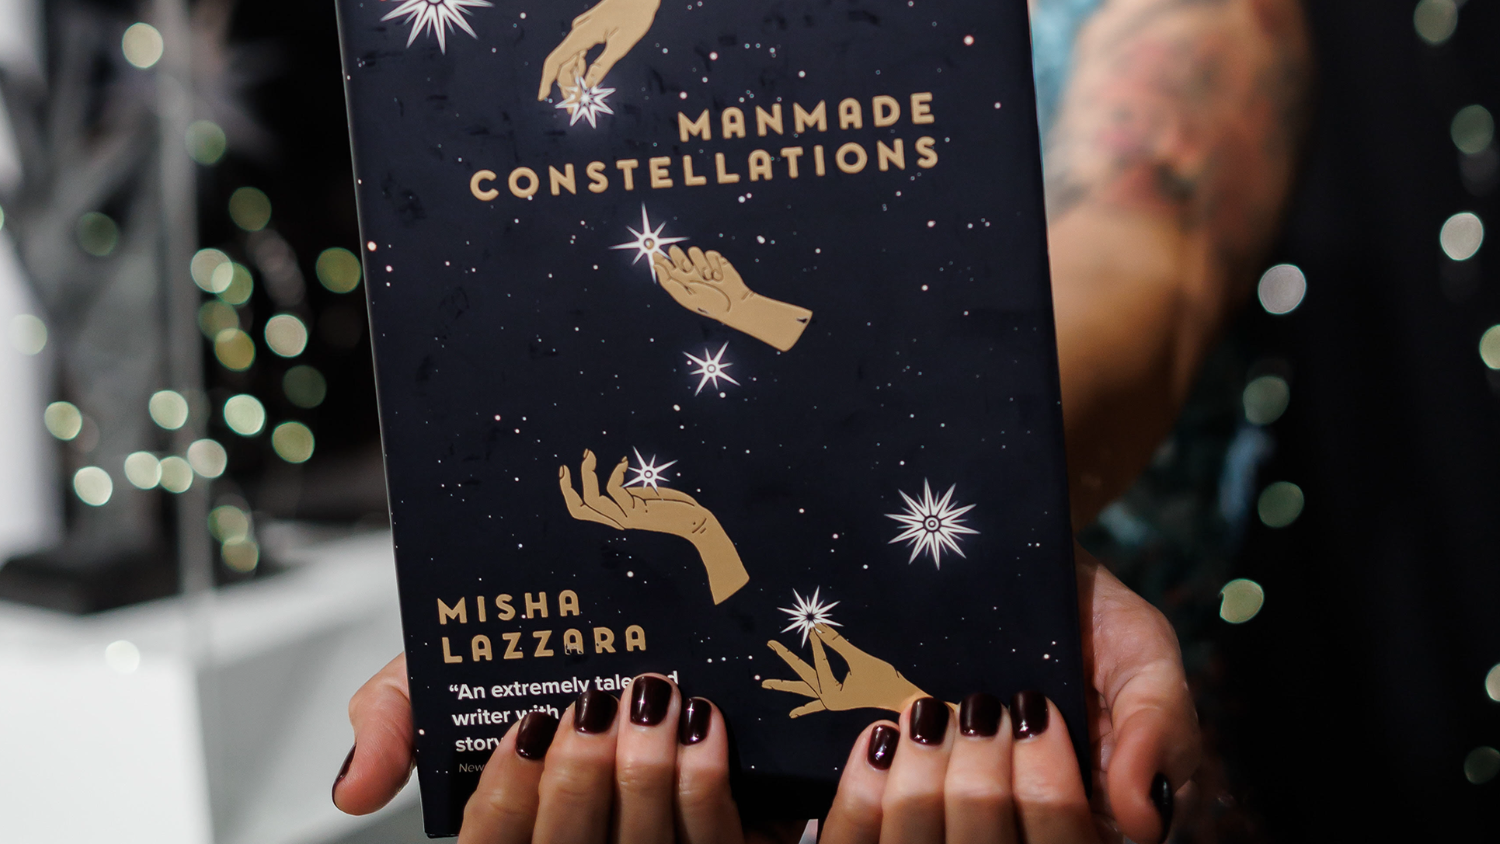 manmade constellations book